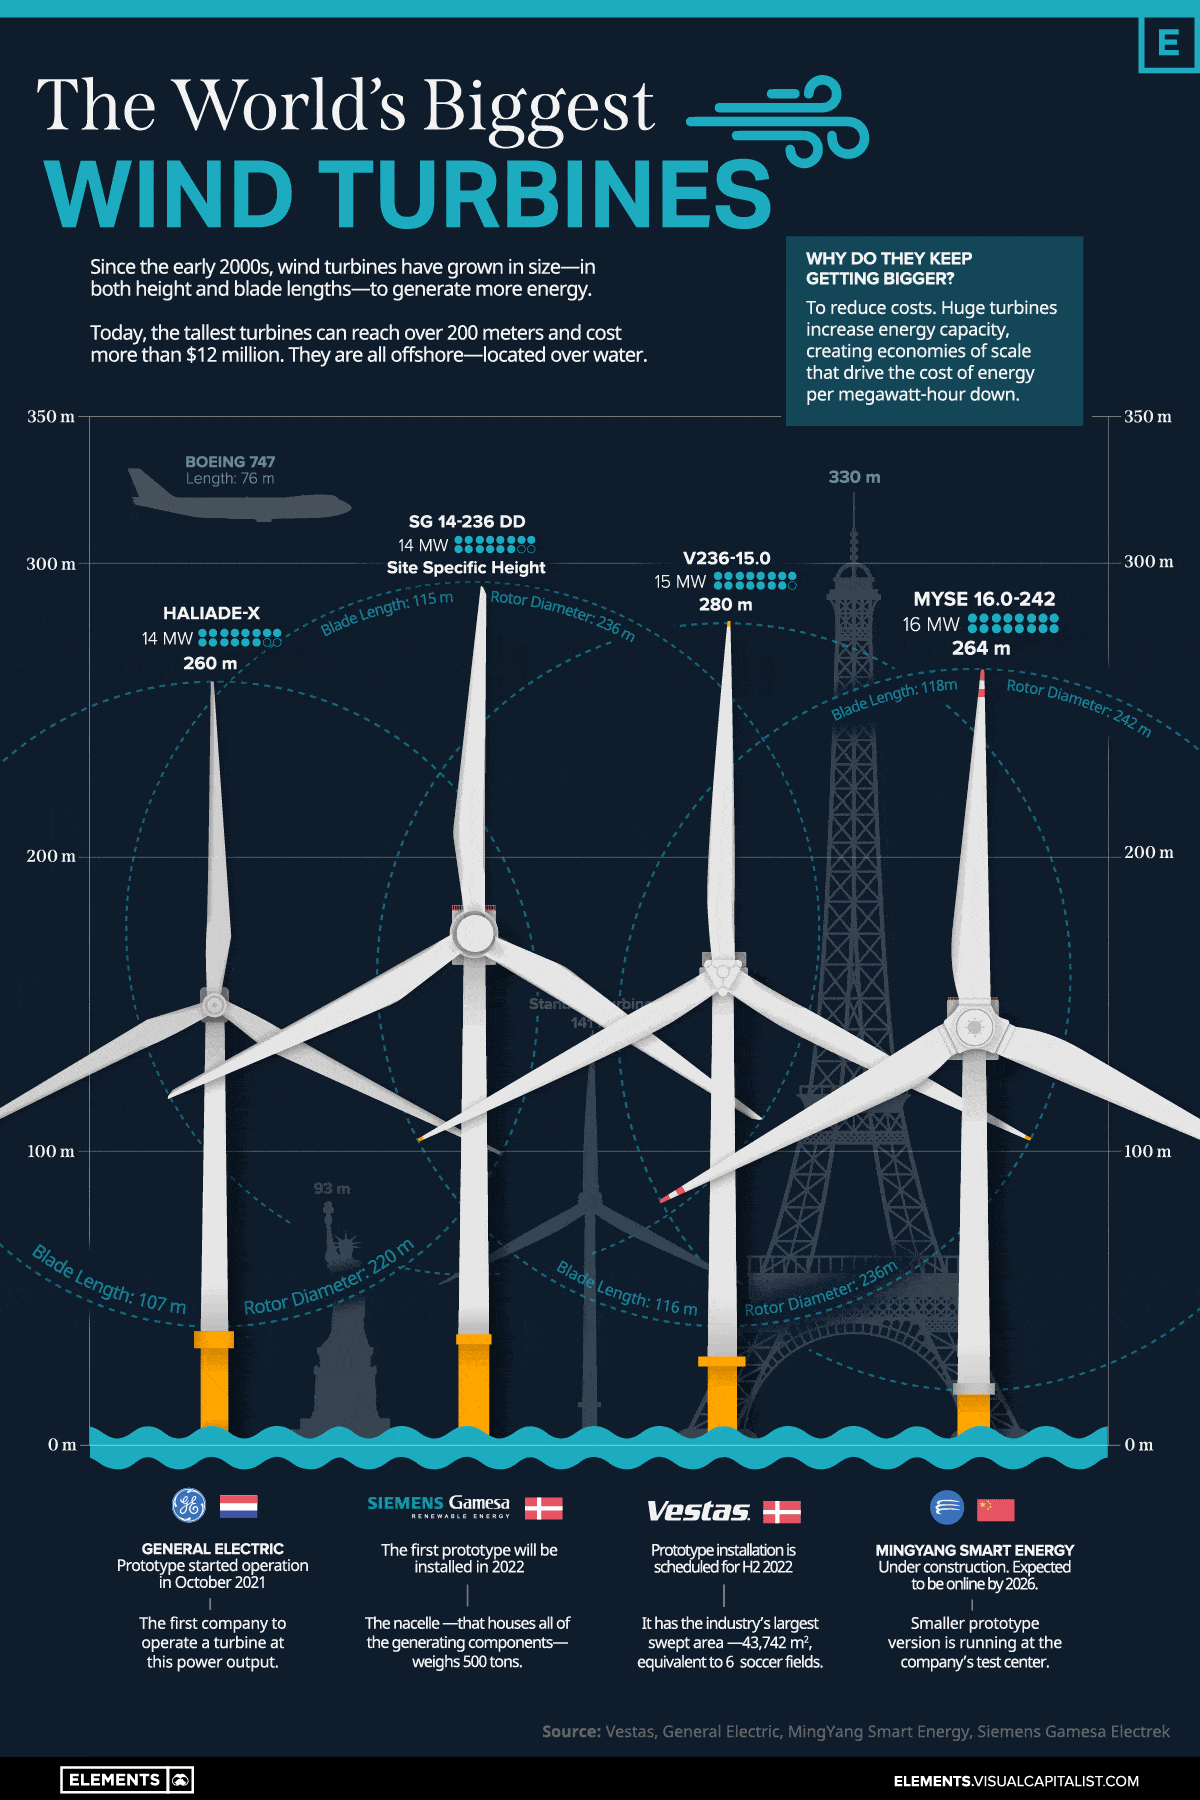 Animation: Visualizing the World's Biggest Wind Turbines